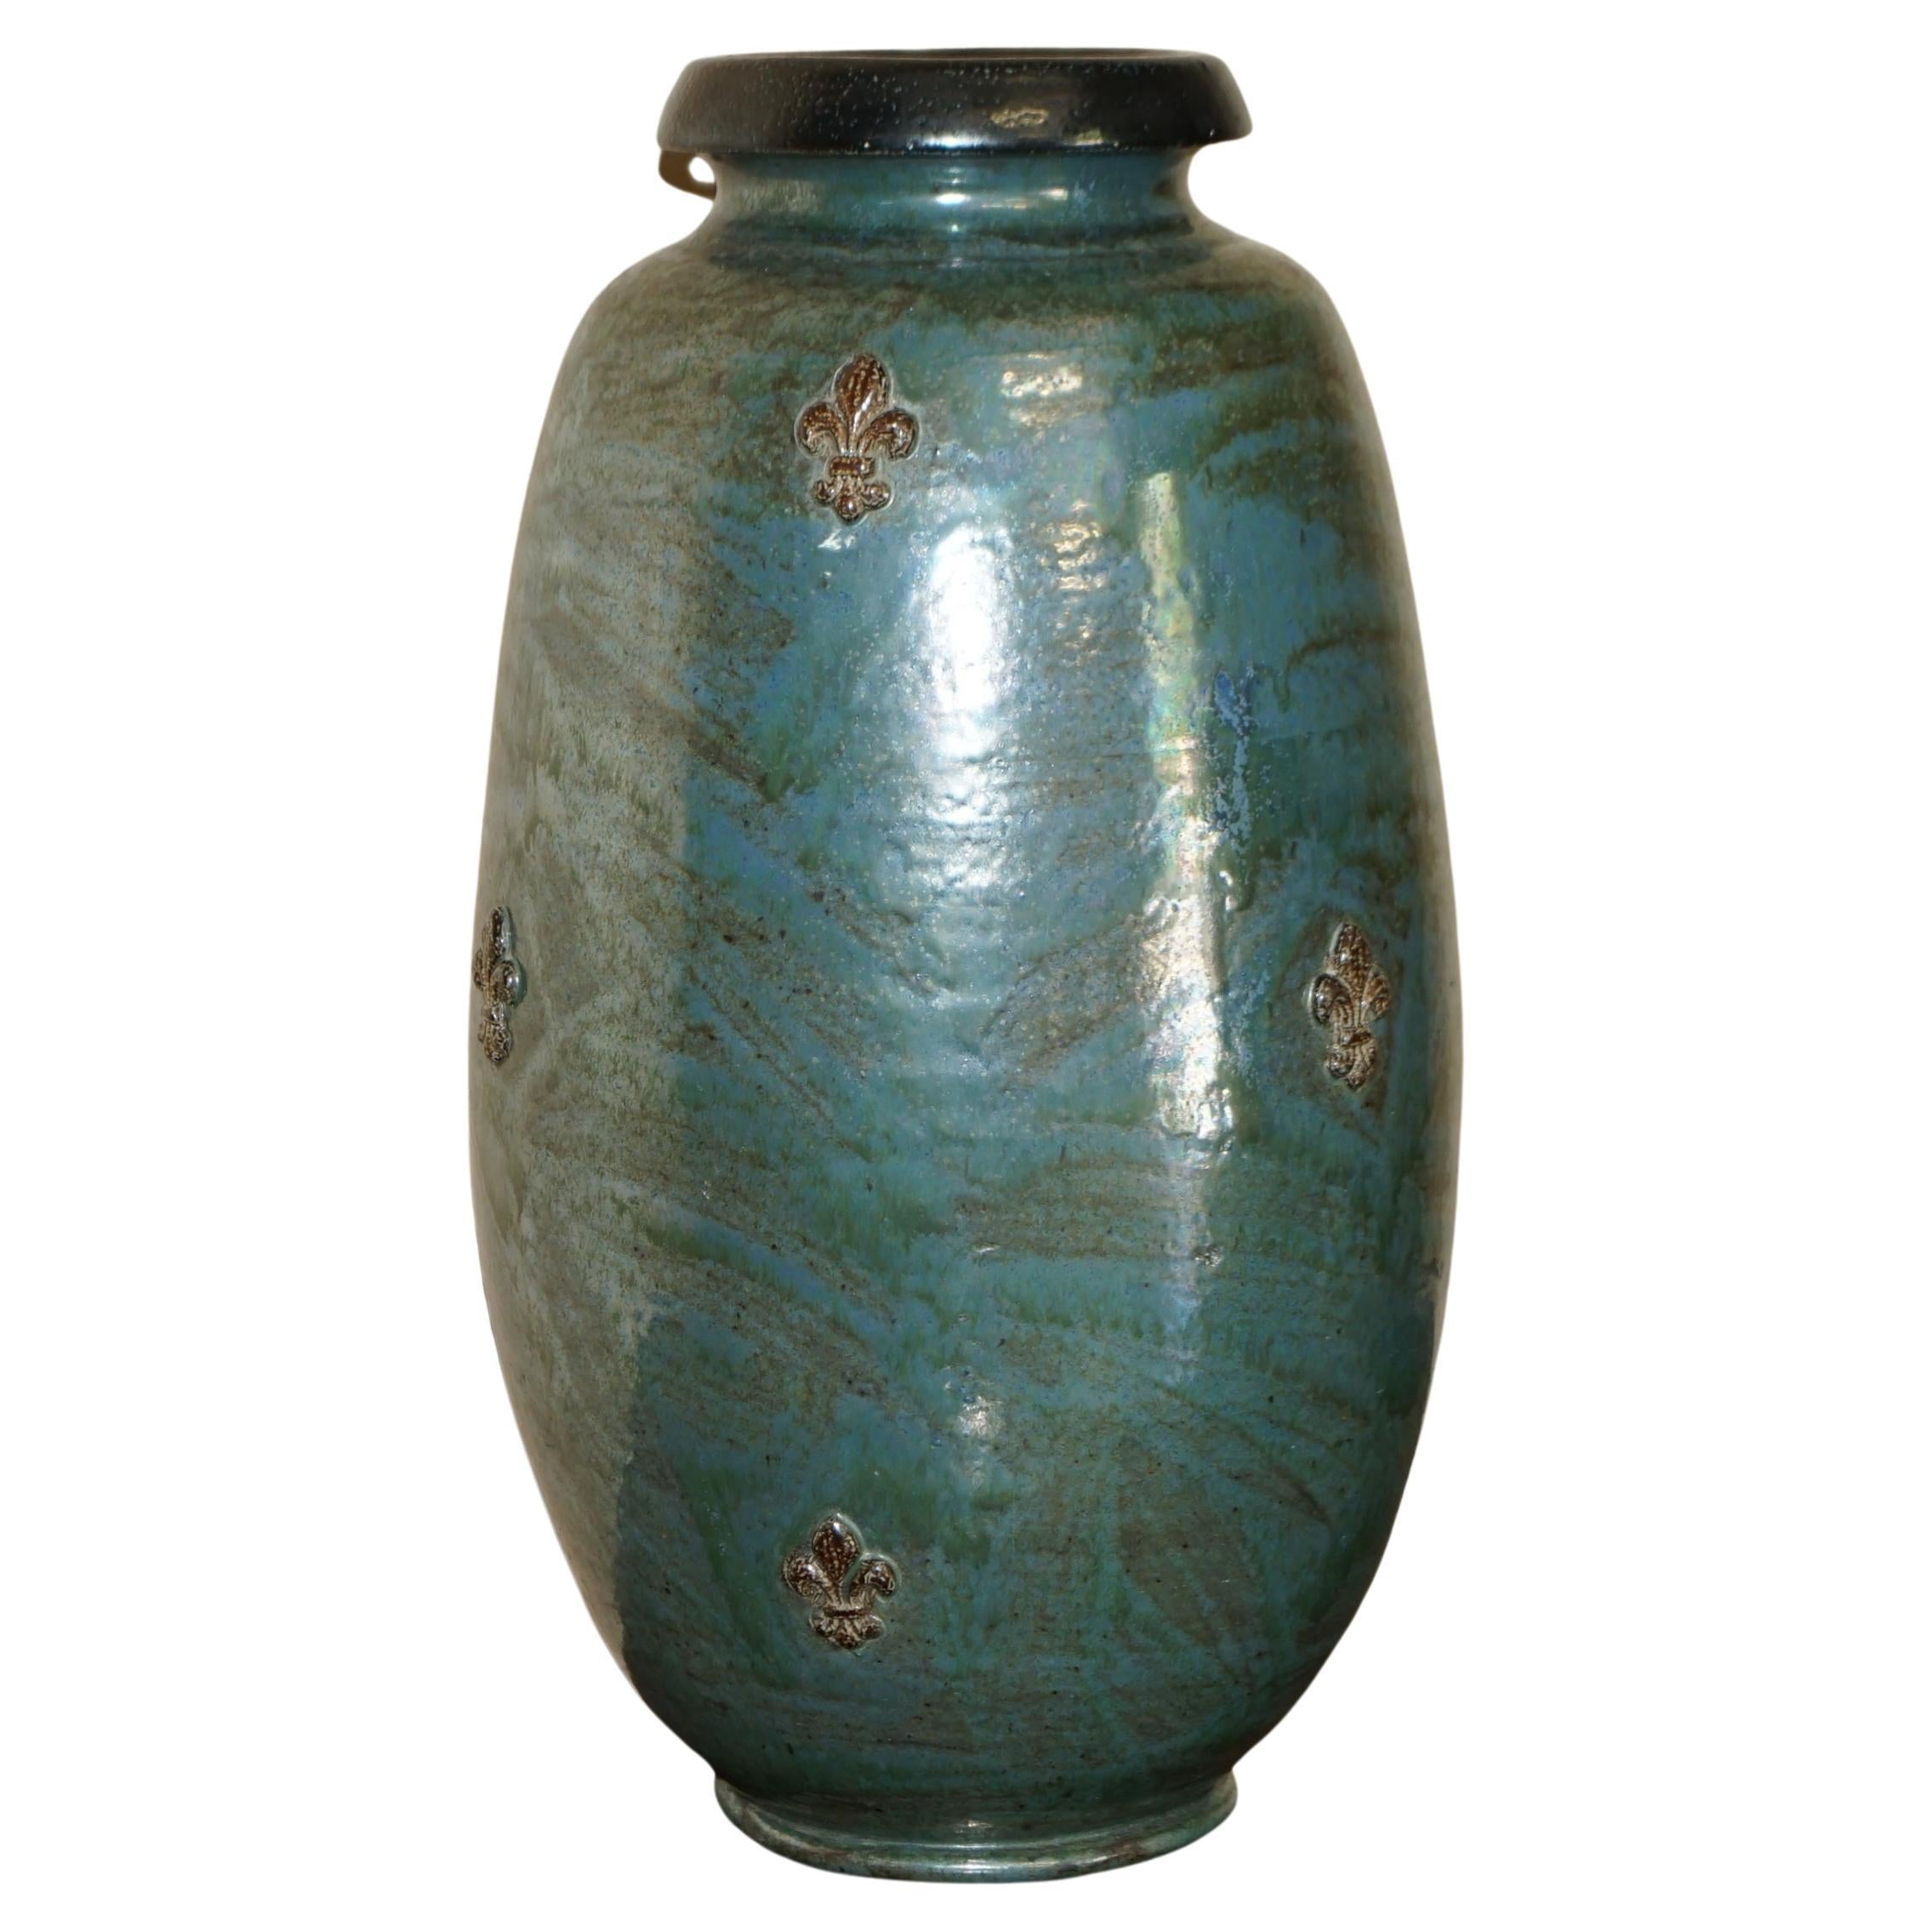 1 of 3 Signed Roger Guerin 1930 Fleur De Lis Ceramic Stoneware Pottery Vase Pots